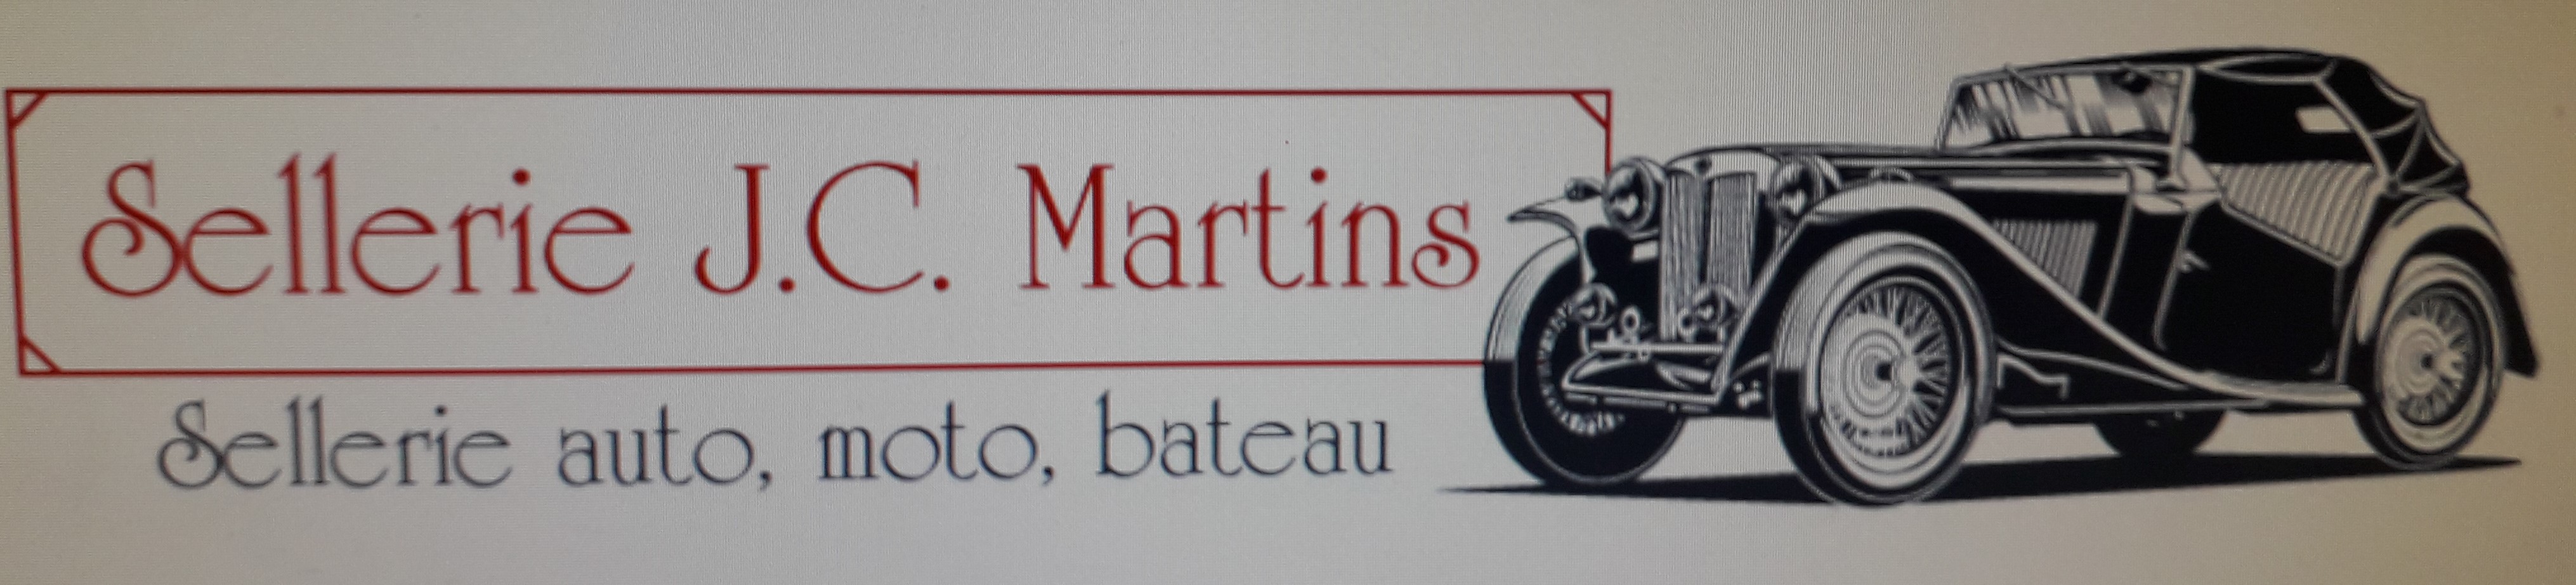 Martins J C.jpg